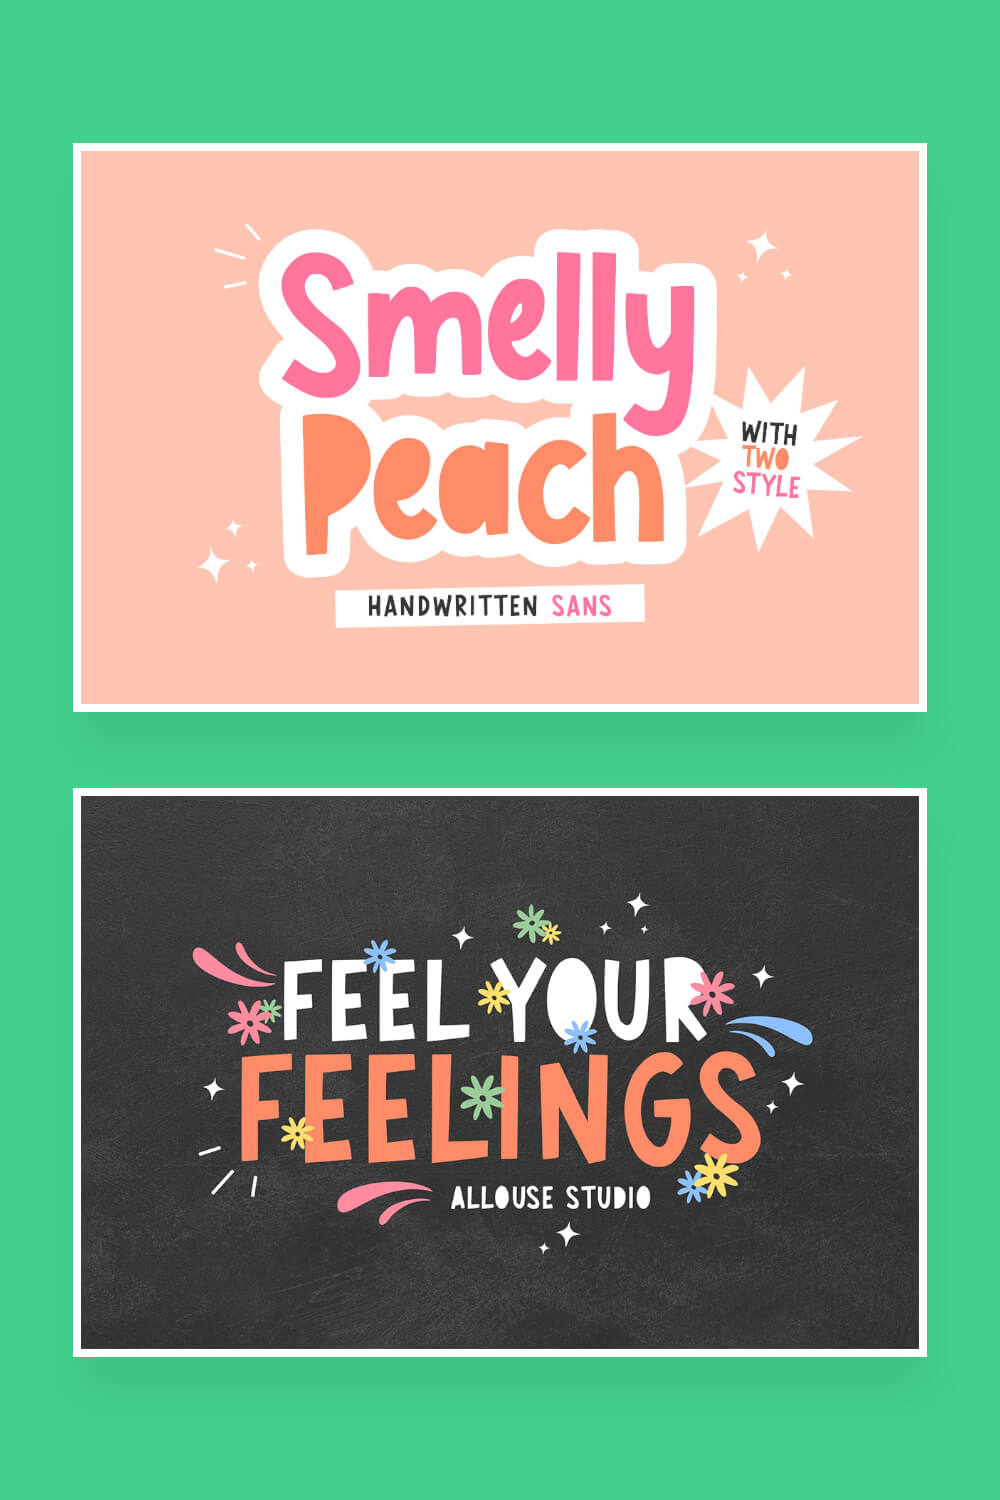 smelly peach friendly handwritten font pinterest image.